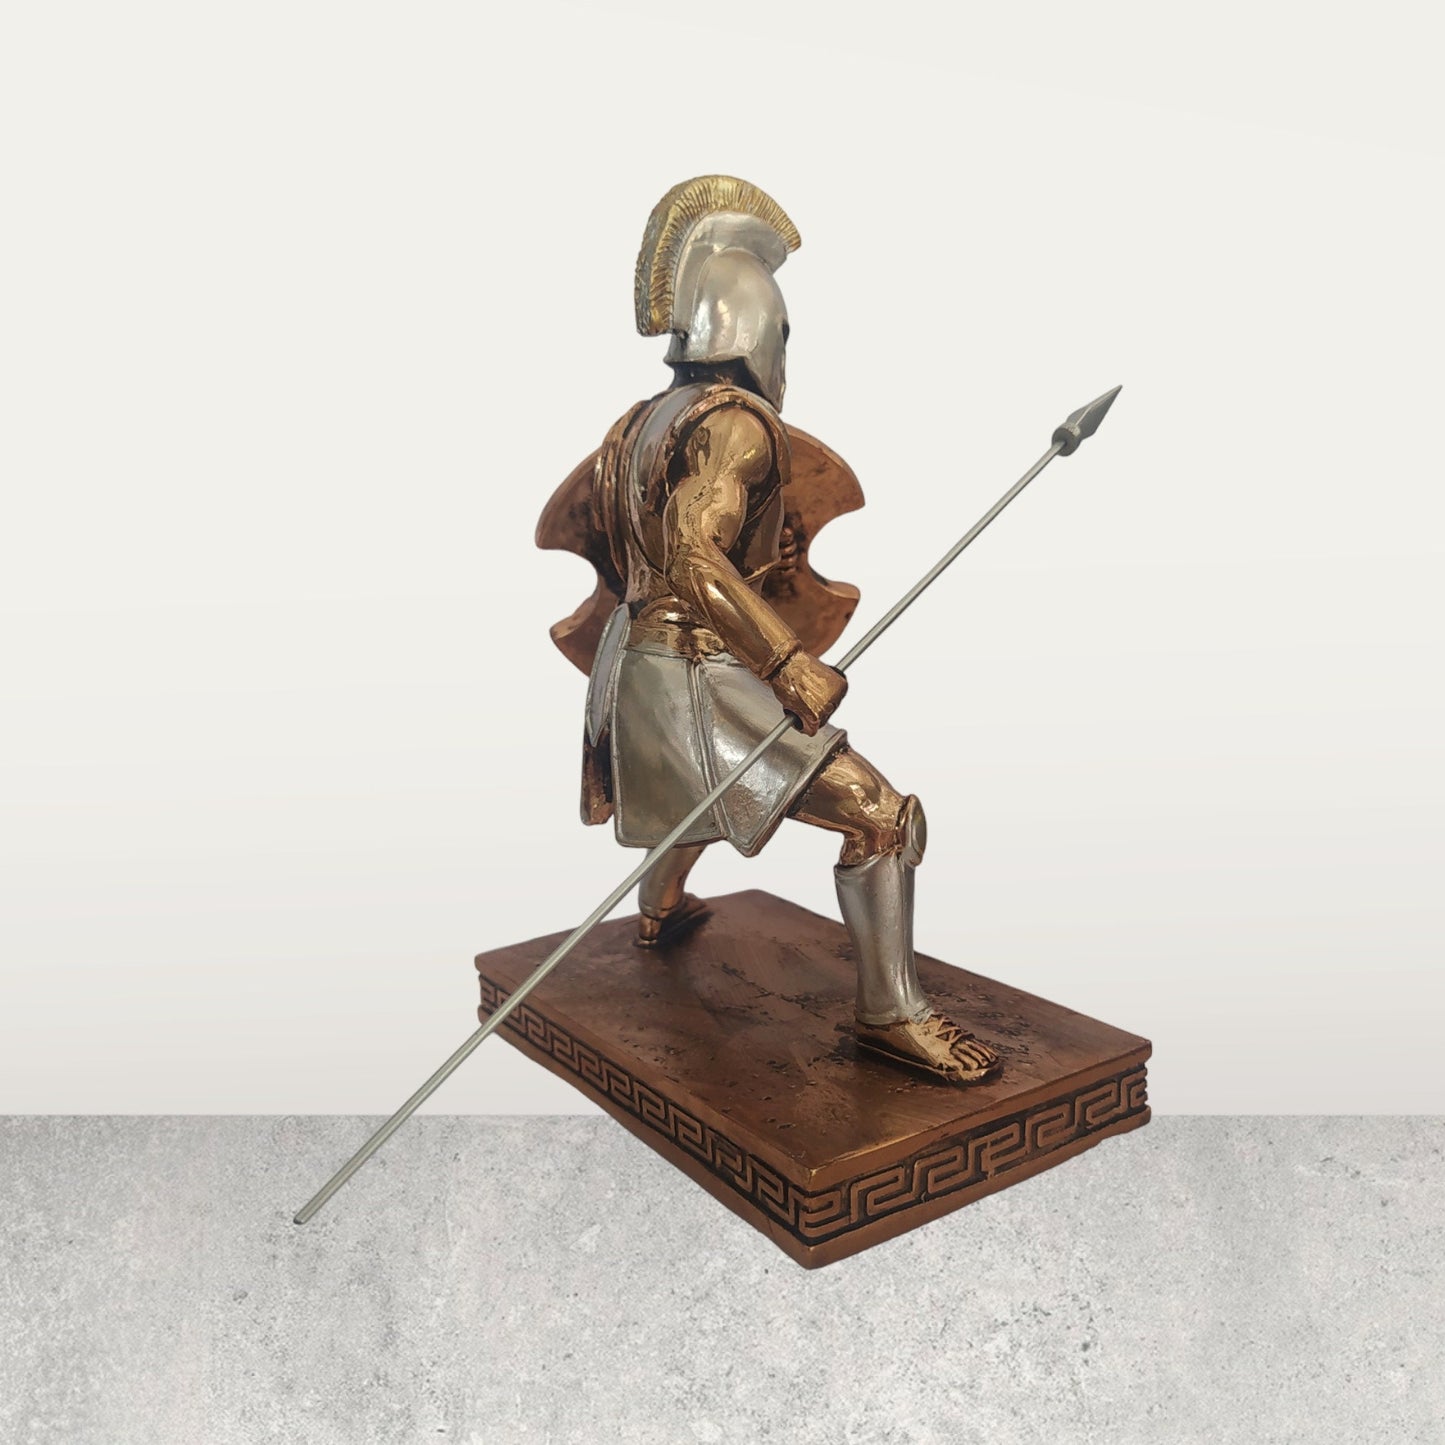 Achilles  Achilleus - King of the Myrmidons - Greek Hero - Son of Thetis and Peleus - Trojan War - Homer's Iliad  - Copper Plated Alabaster